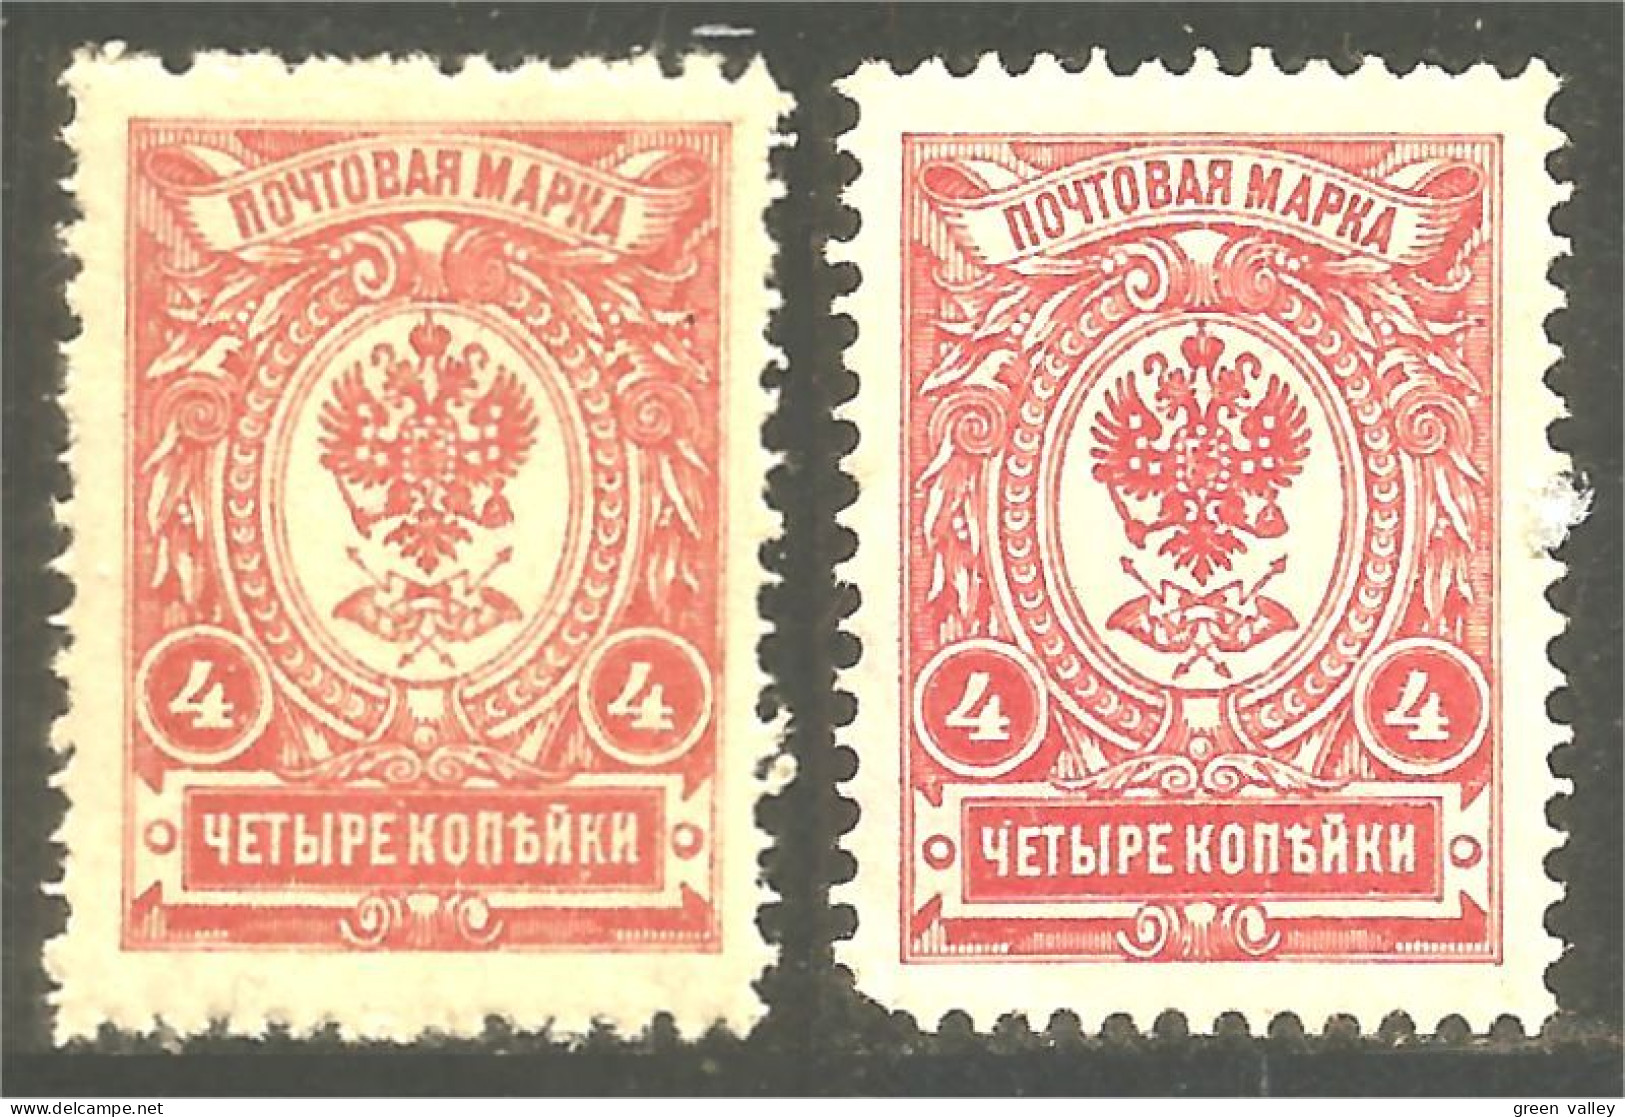 771 Russie 4k 1909 Carmine (mint) Carmine-rose (no Gum) Aigle Imperial Eagle Post Horn Cor Postal Varnish (RUZ-355) - Ongebruikt